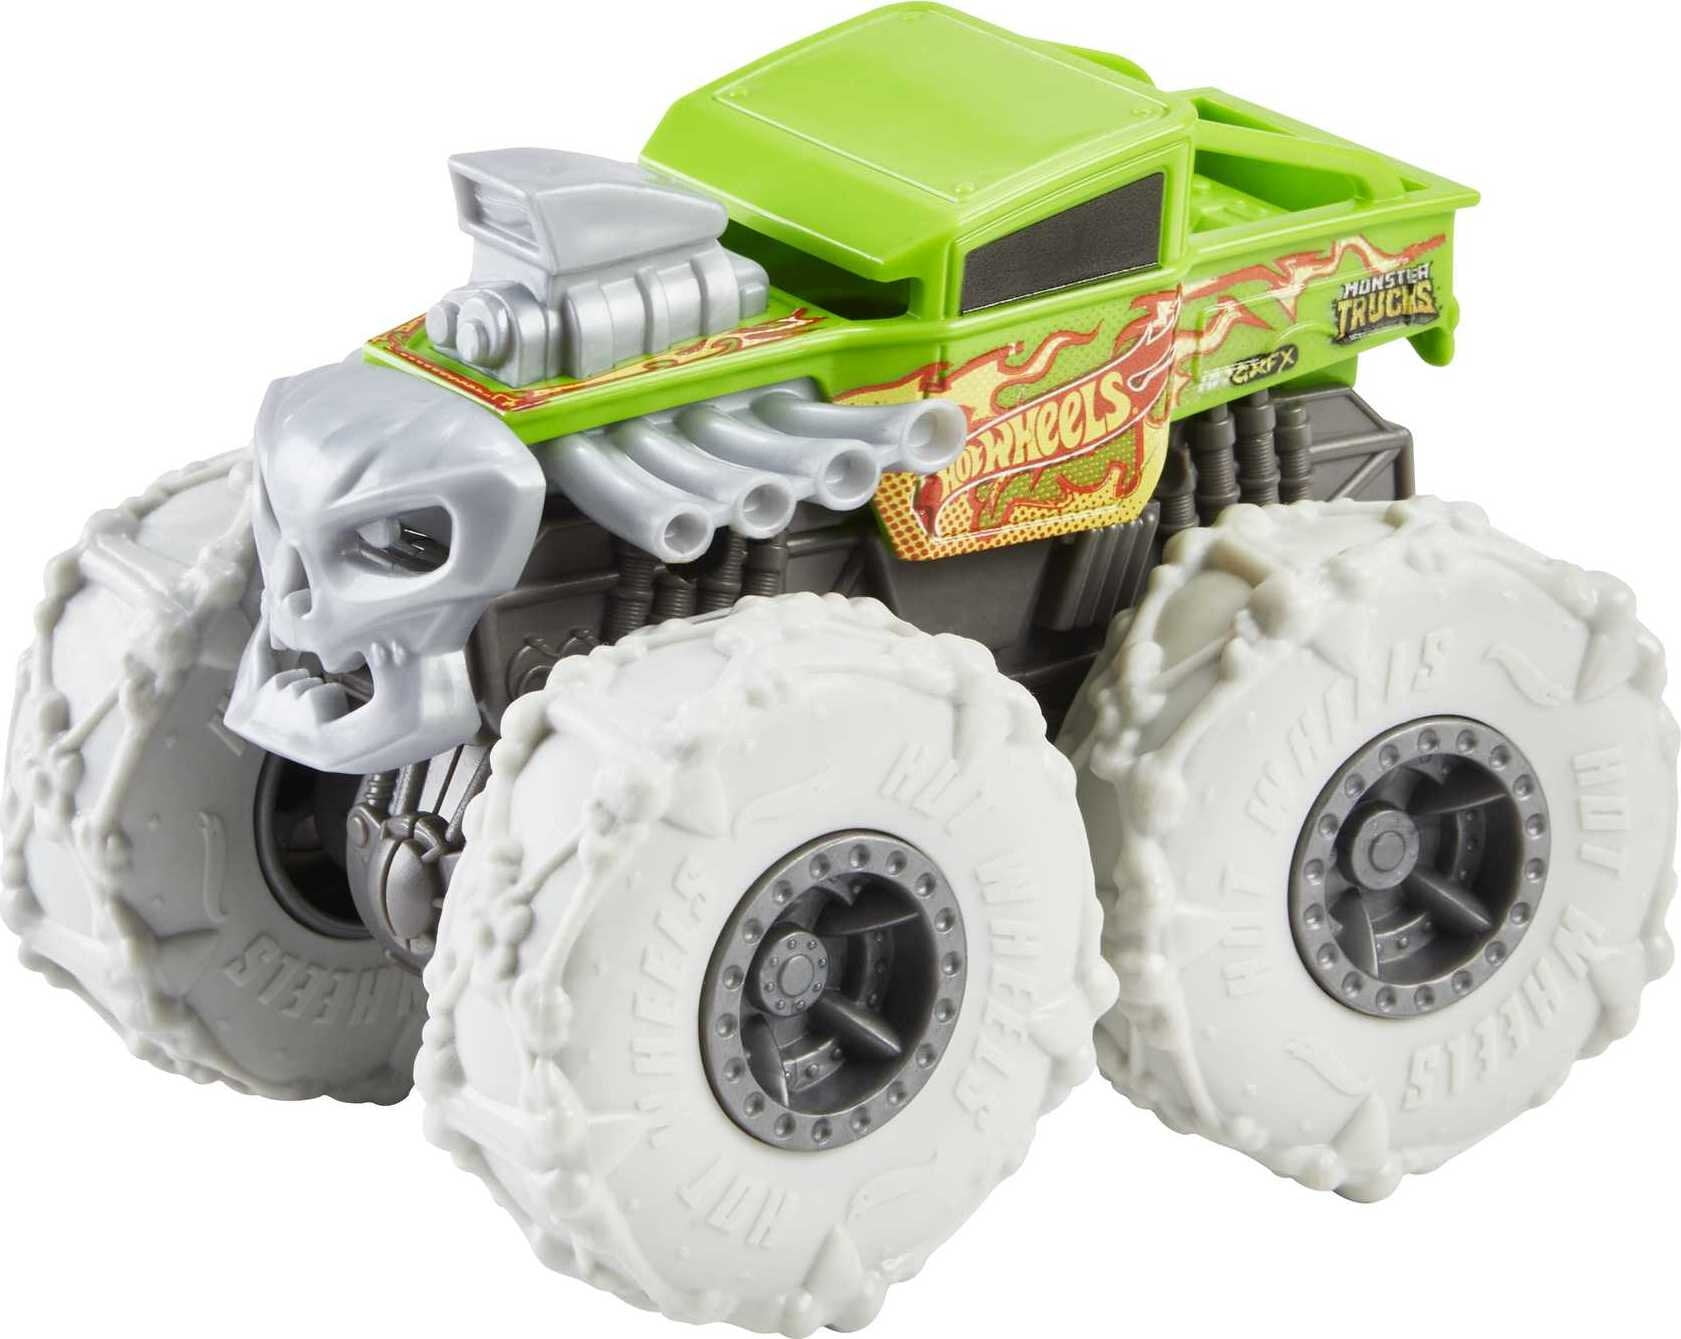 Hot Wheels Pista com veículo Monster Truck Sabretooth Showdown